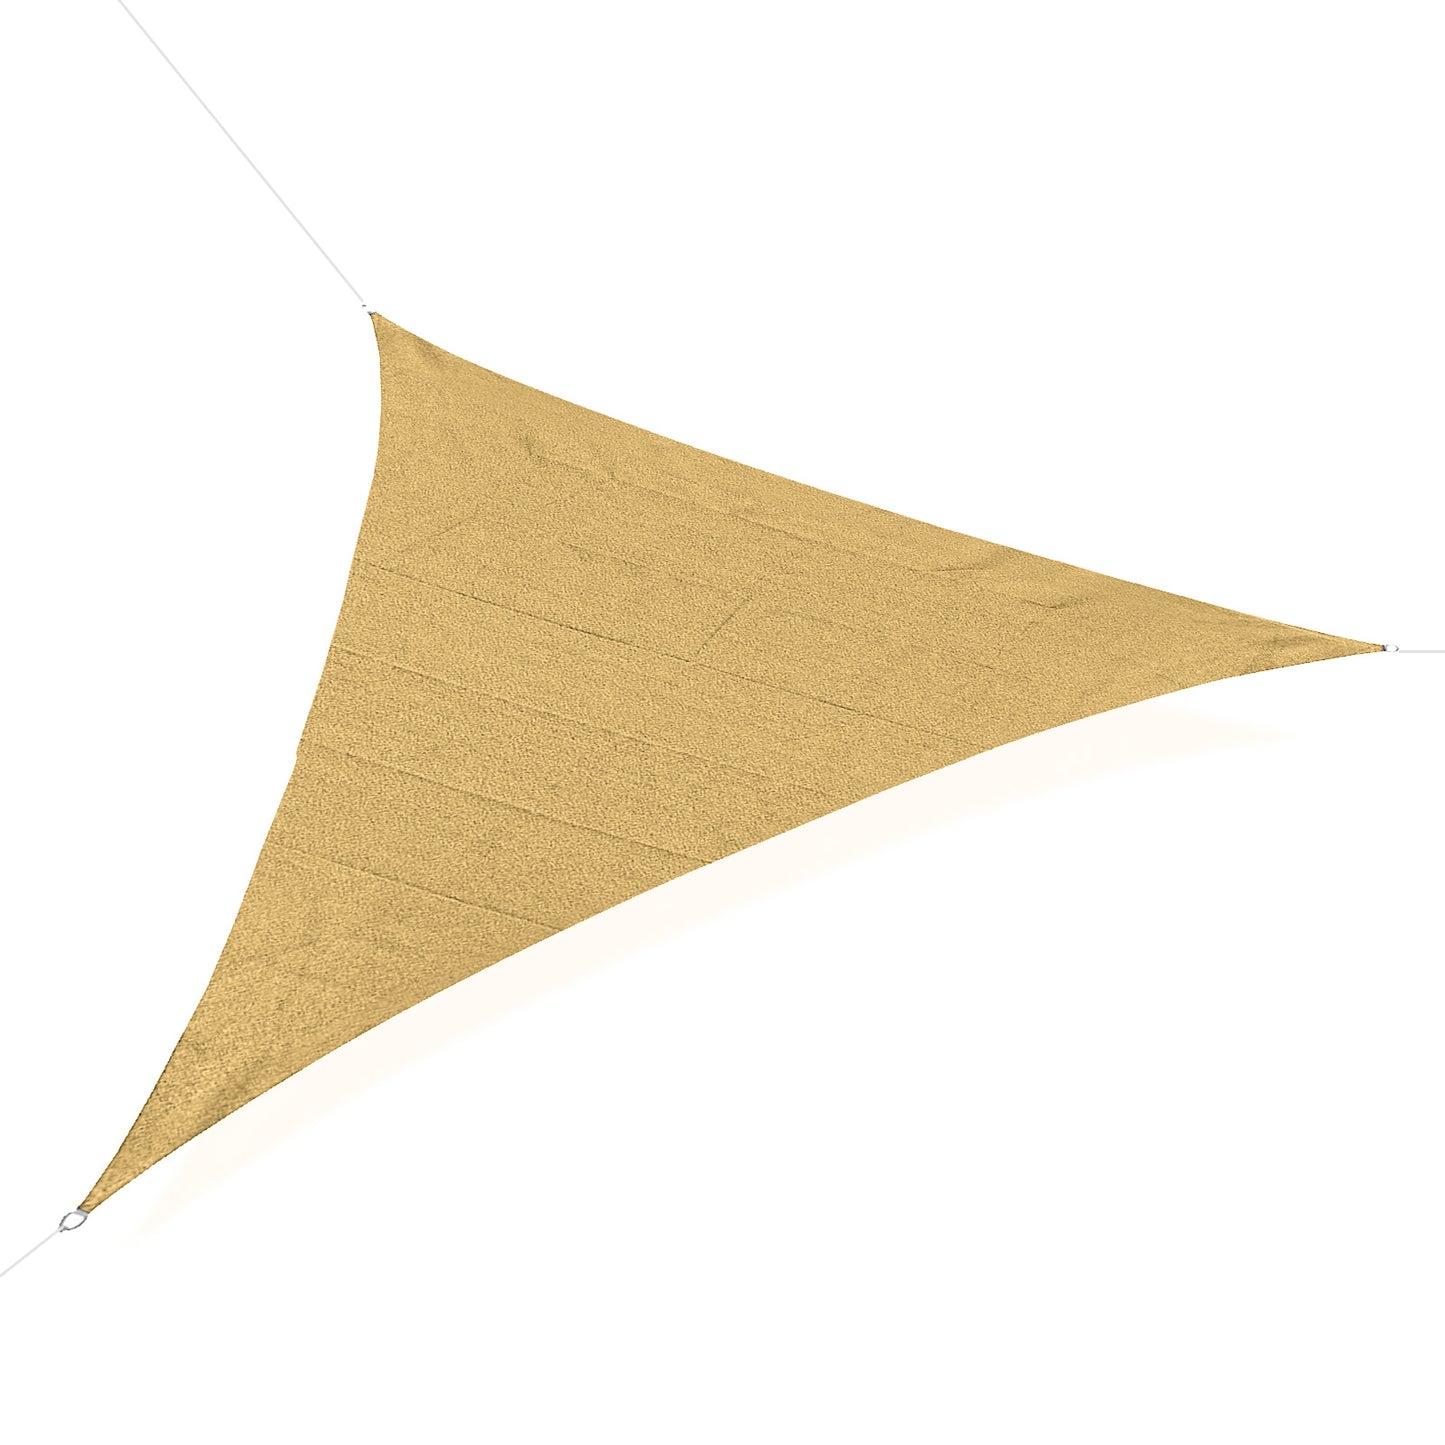 Outsunny Triangle Sun Shade Sail 5m x 5m x 5m UV Block Canopy Shelter, Sand